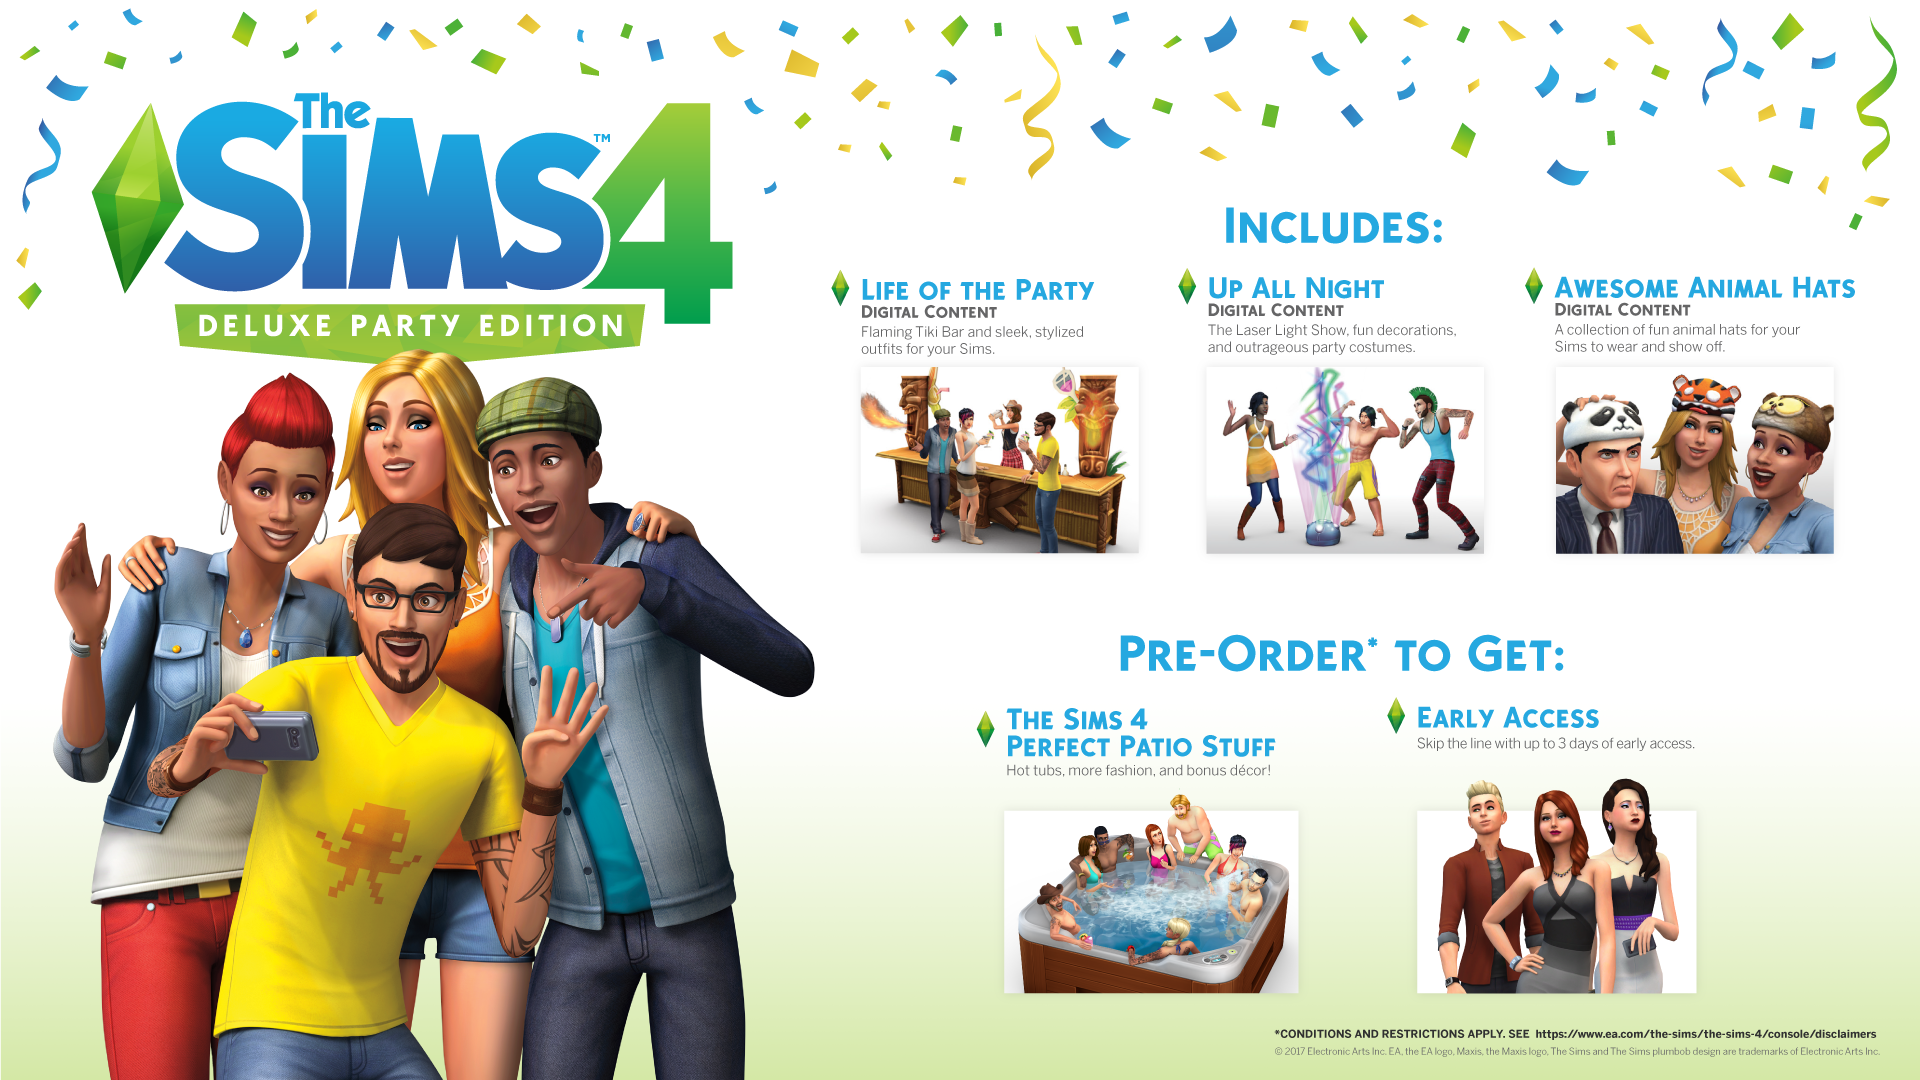 the sims free play mac